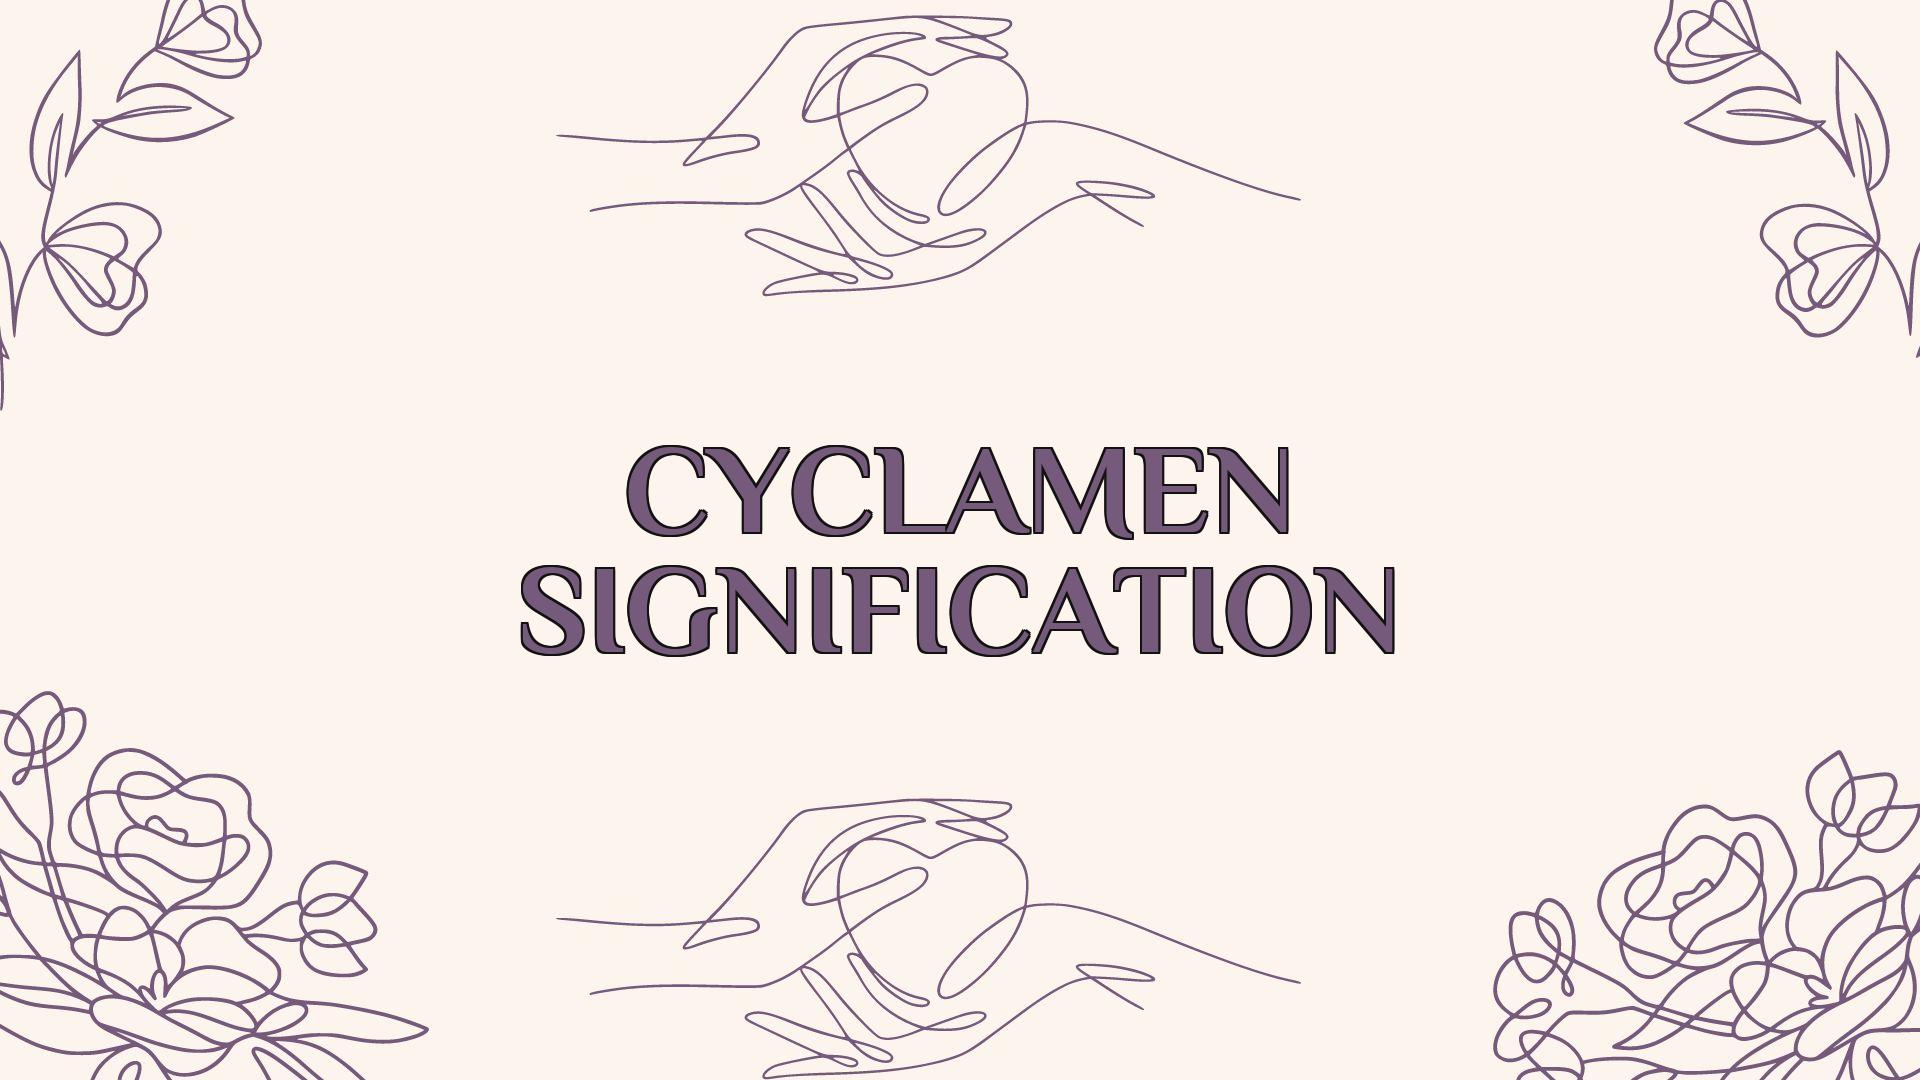 cyclamen signification